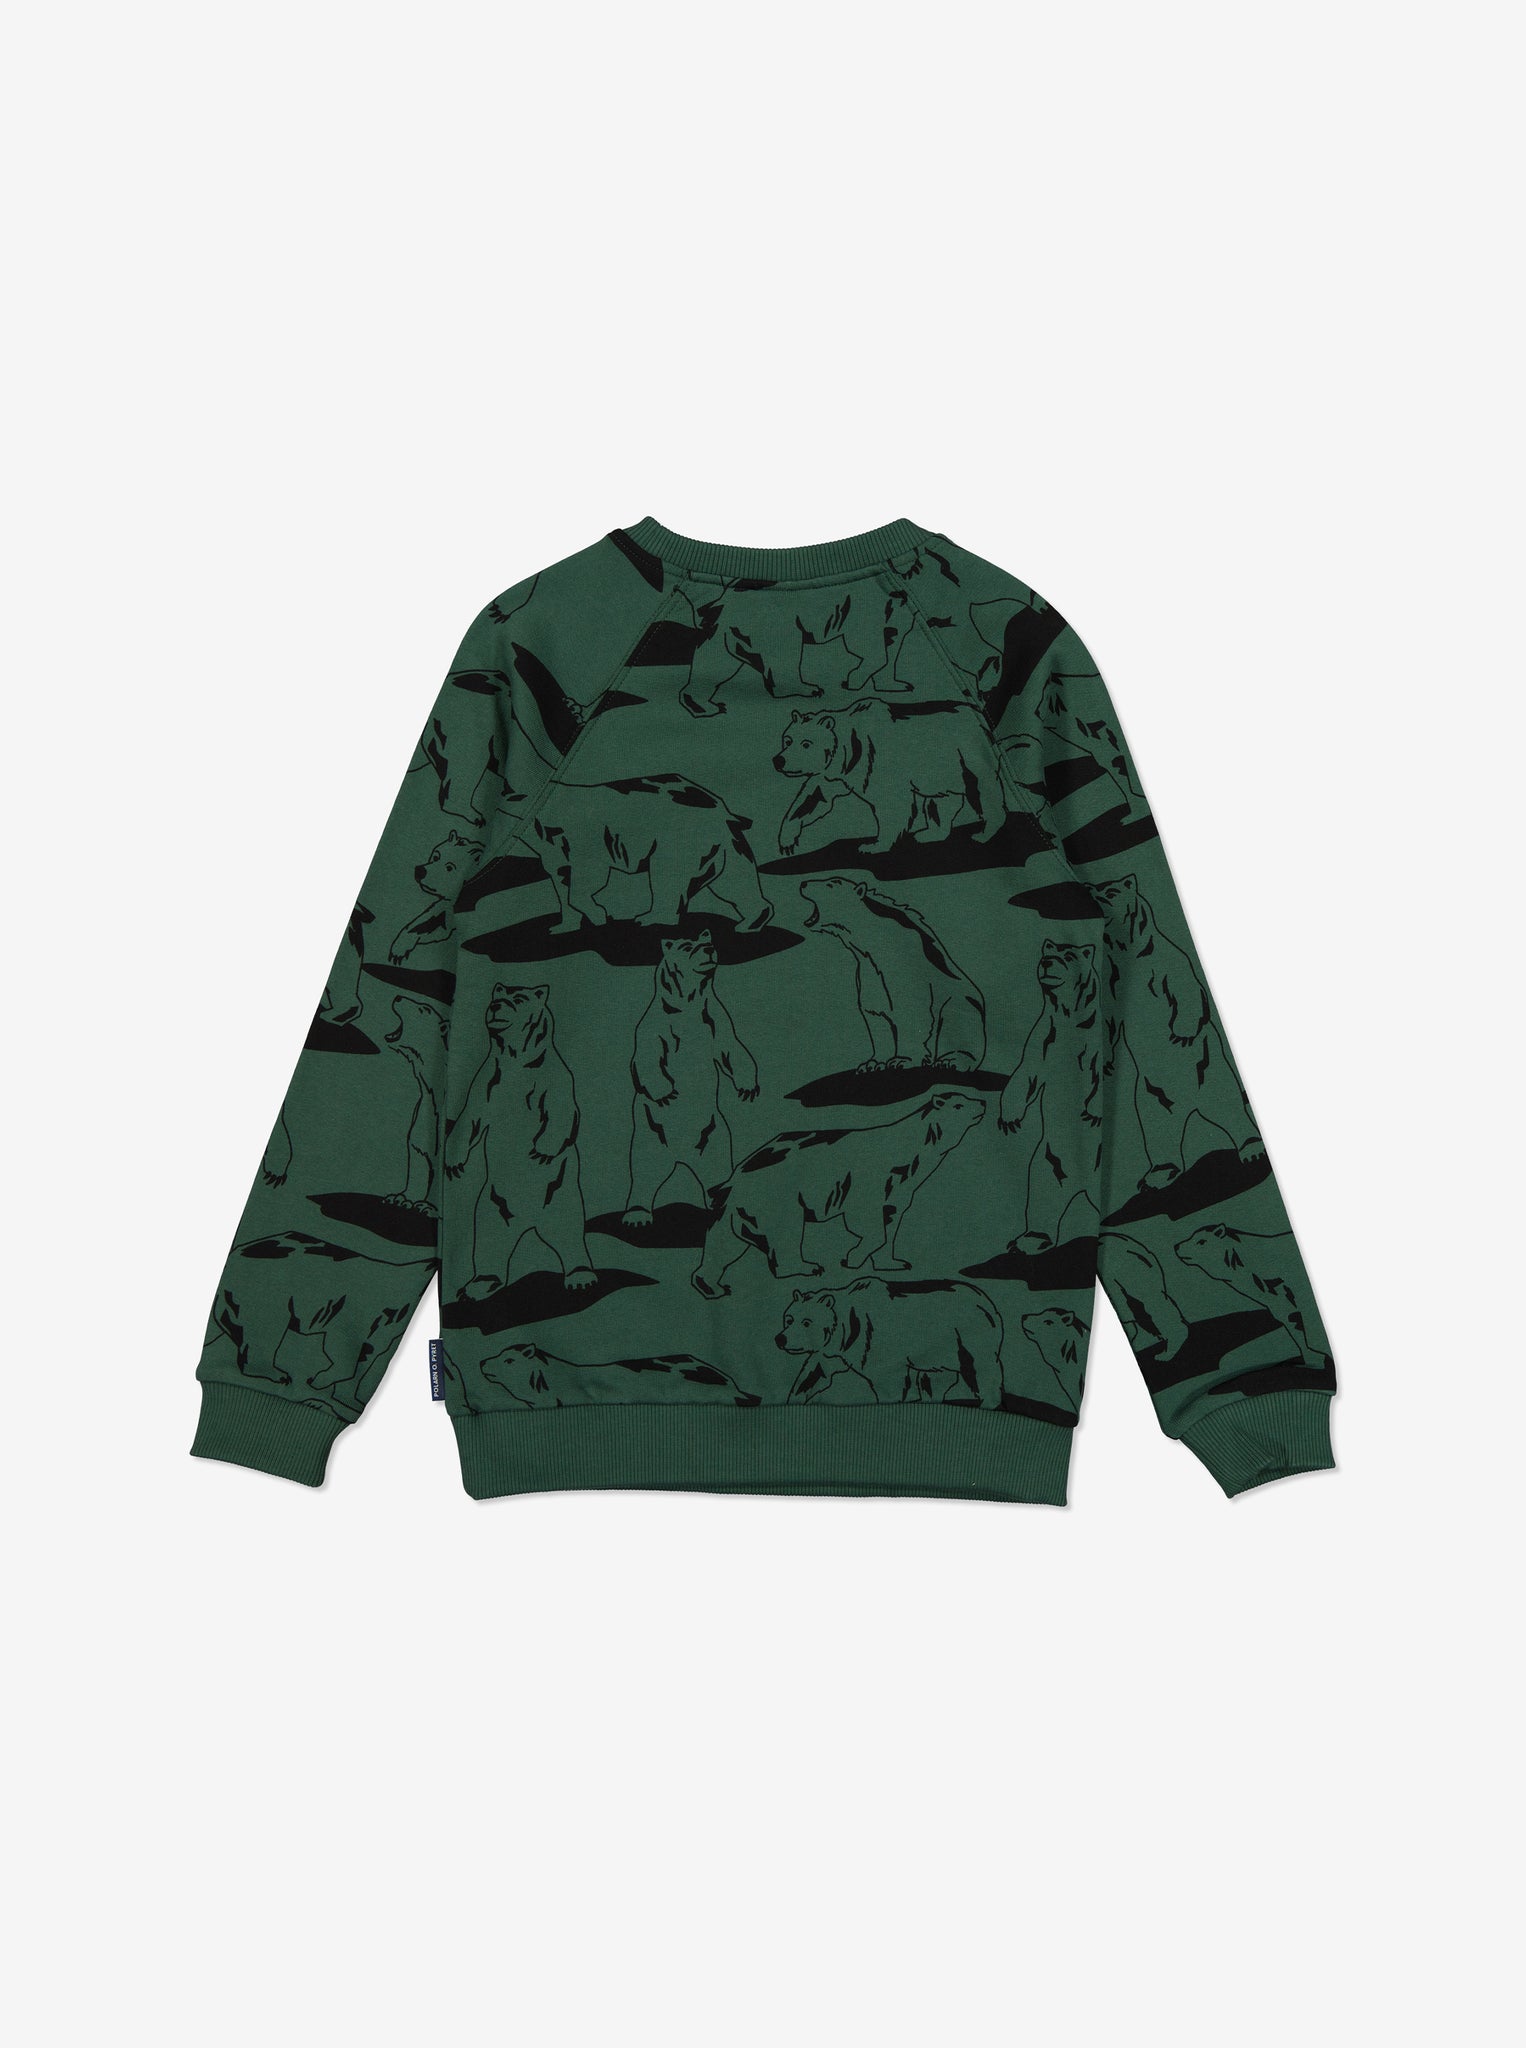 Bear Print Kids Sweatshirt